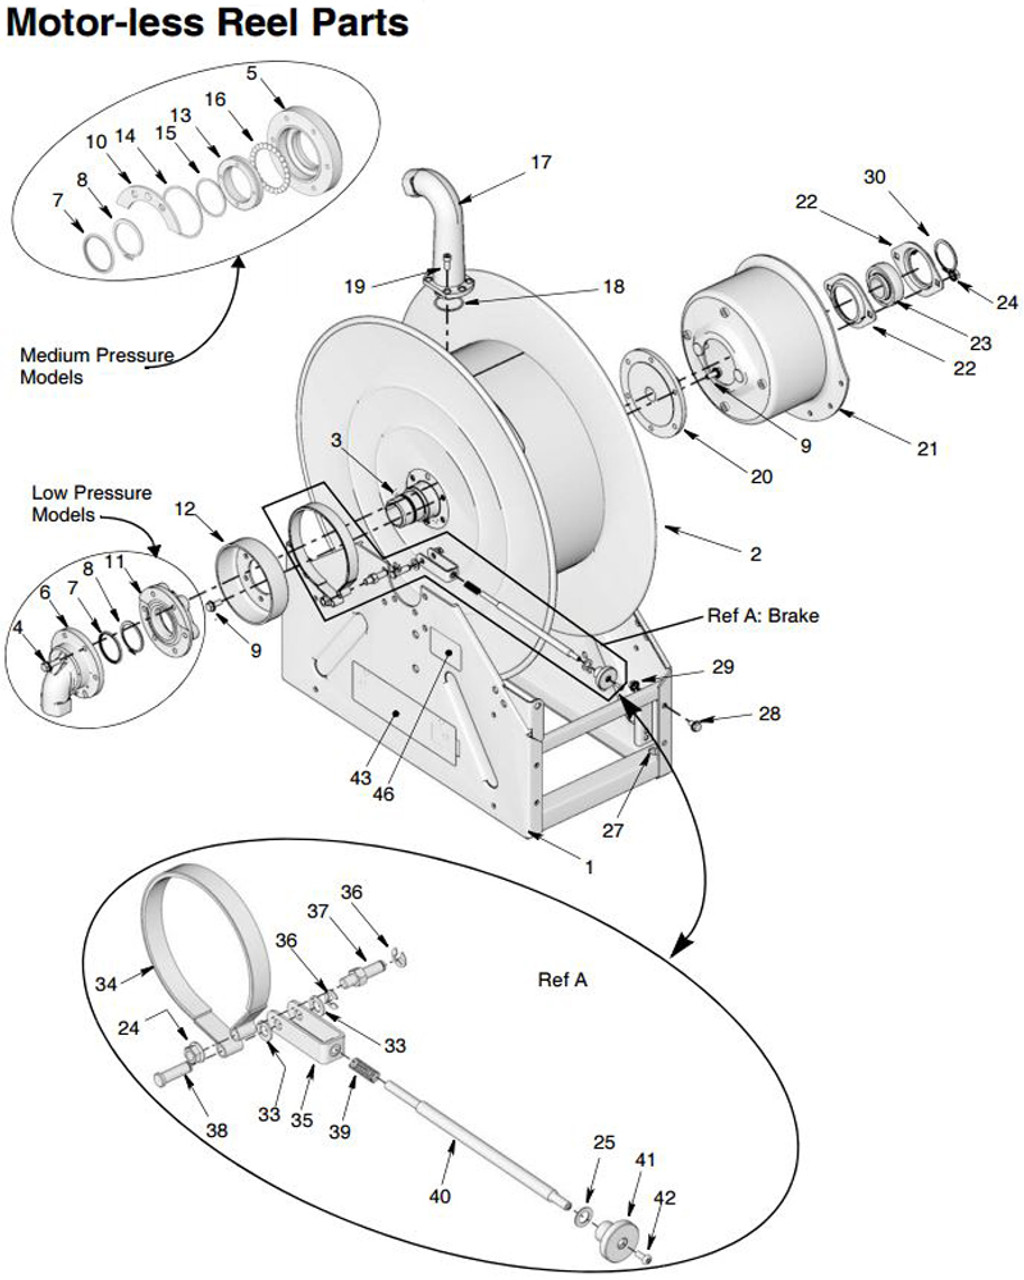 Graco XD 60 Hose Reel Motor Assembly & Hydraulic Control Kits - John M.  Ellsworth Co. Inc.